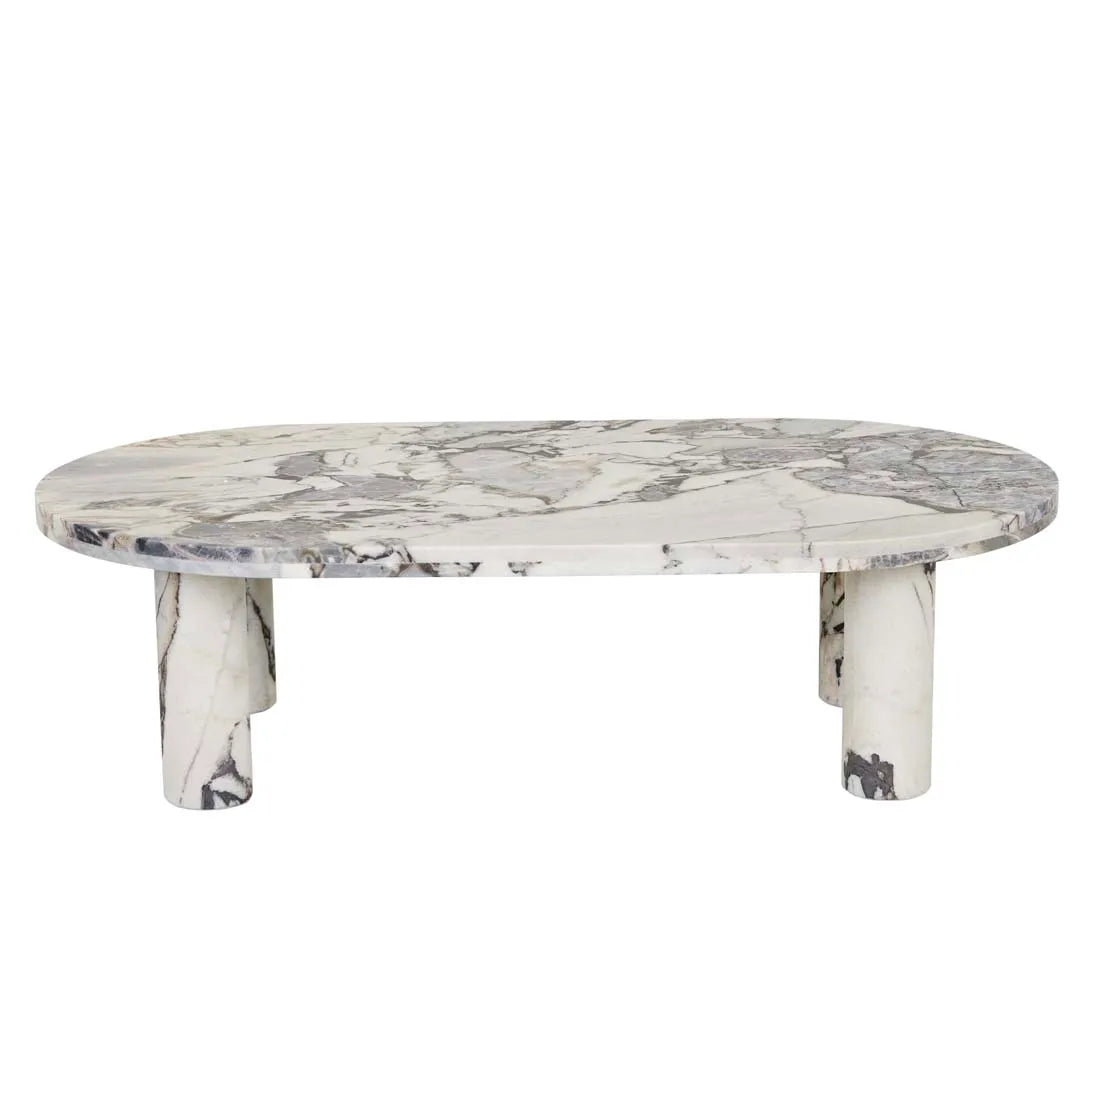 Amara Round Leg Oval Coffee Table - Natural Ocean Marble | Creeping Fig